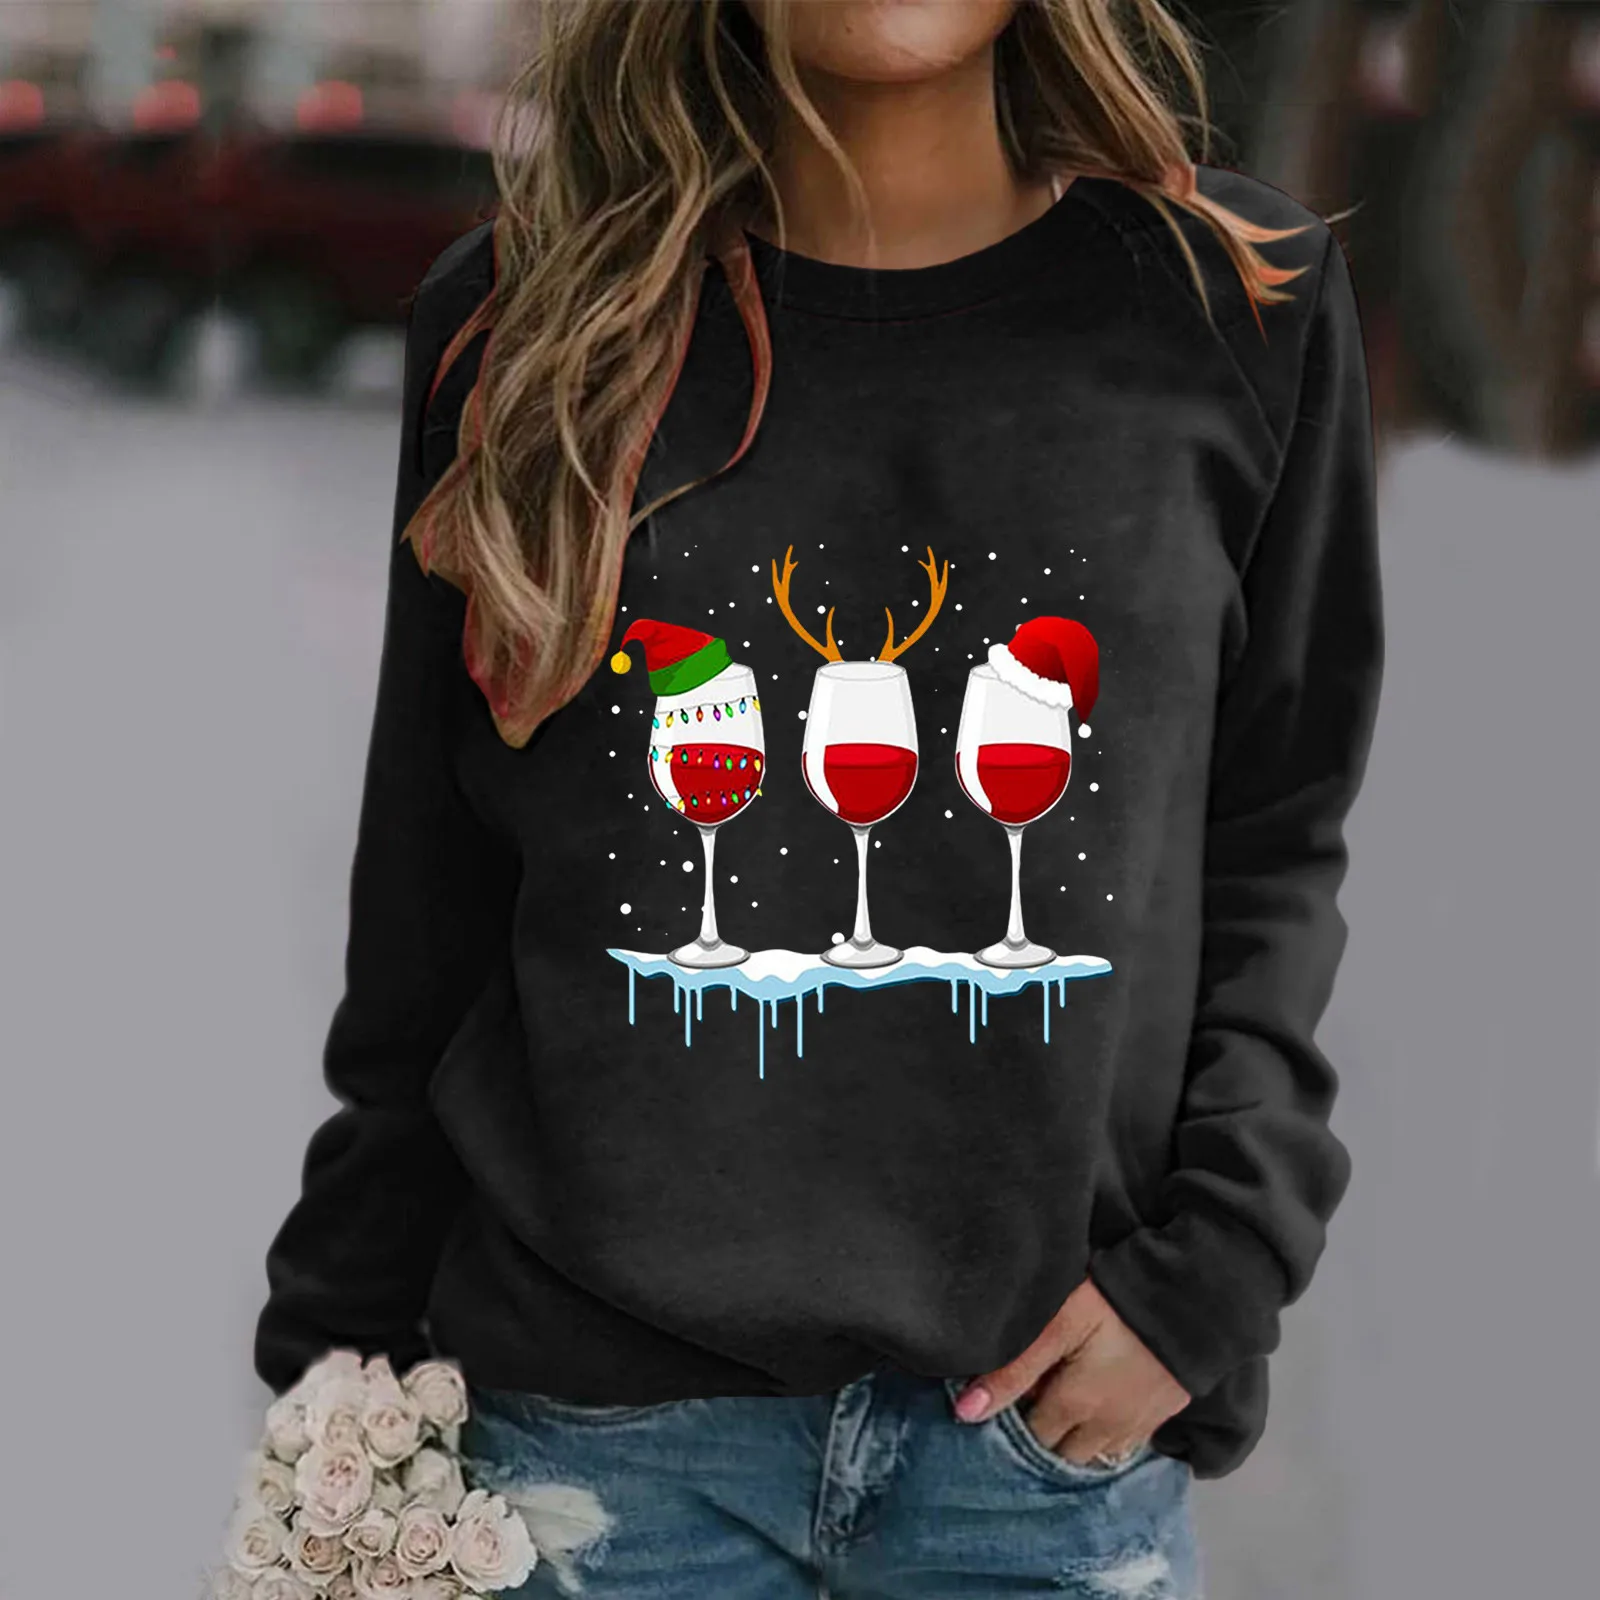 Women Wine Glass Christmas Hats Sweatshirts Christmas Xmas Gifts Cartoon Top Pullover  Fashion New Year Blouse